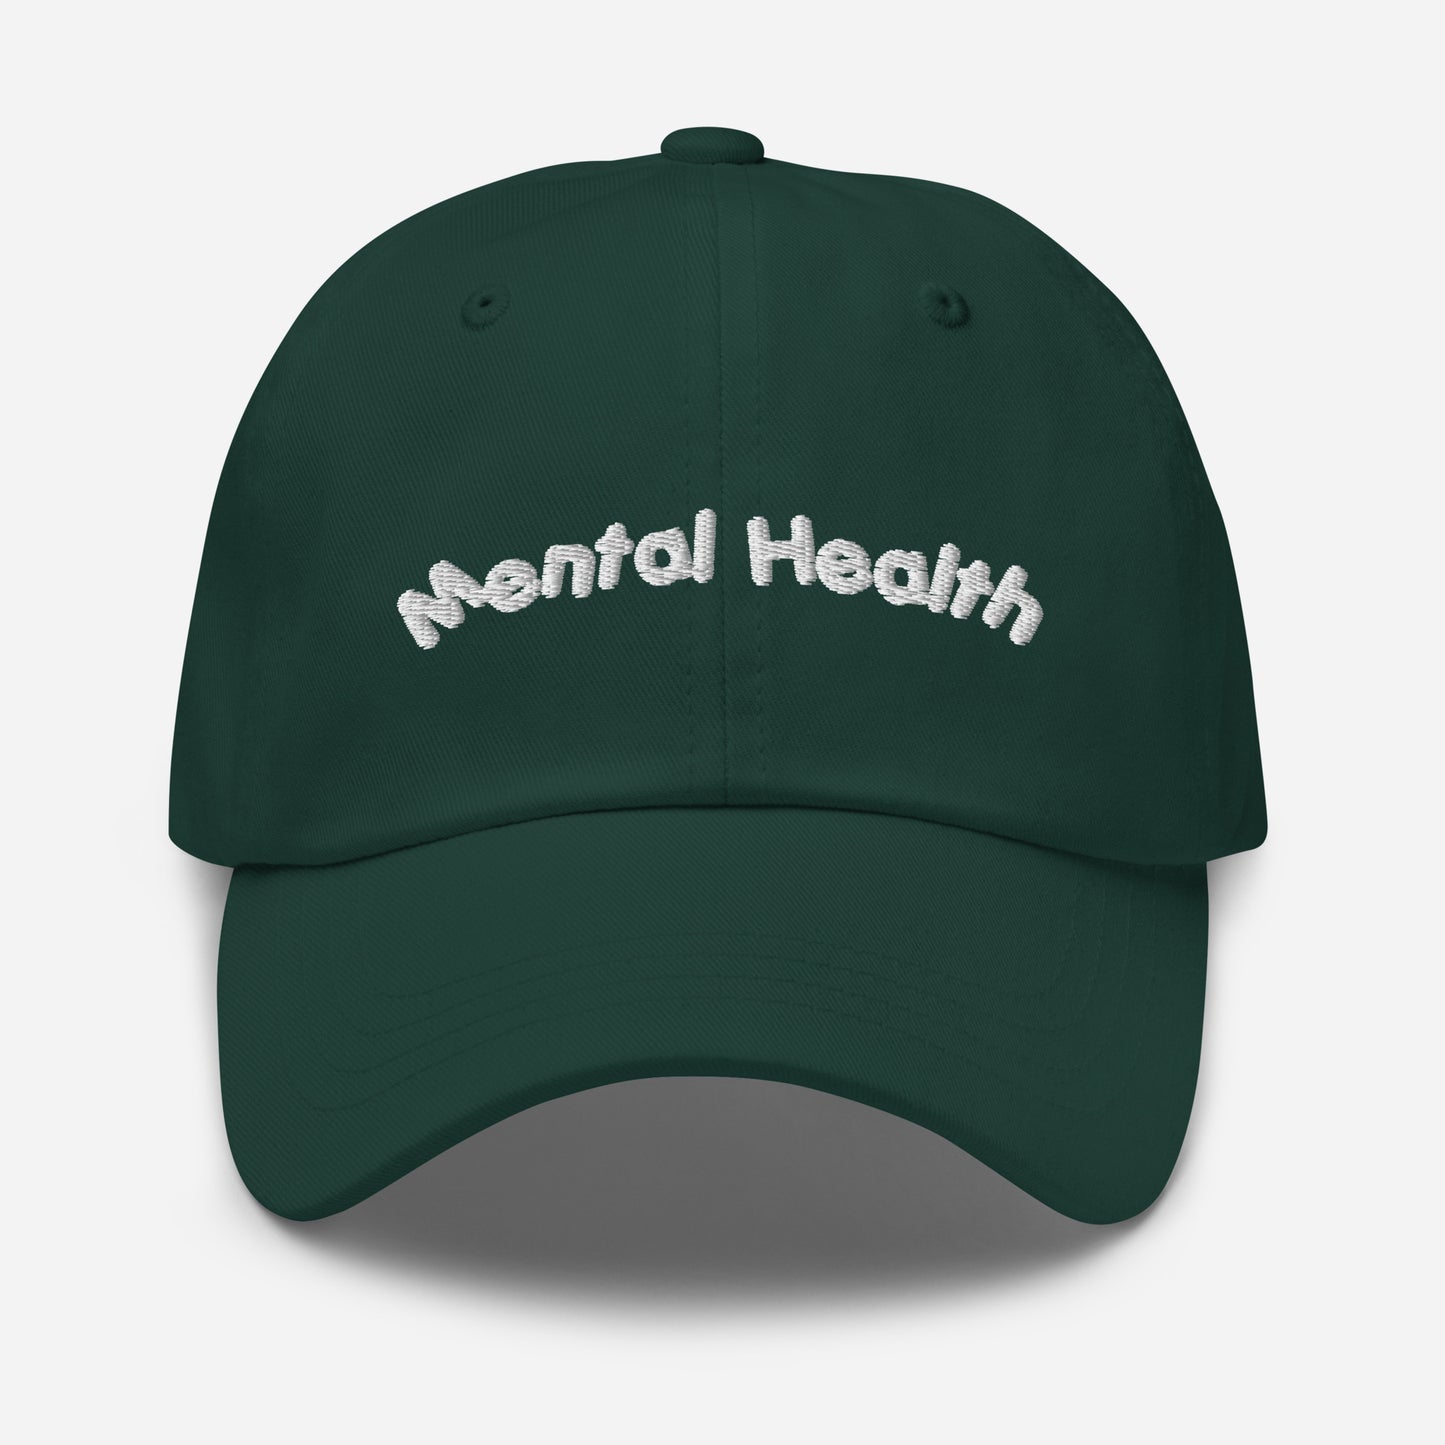 "Mental Health" Dad hat